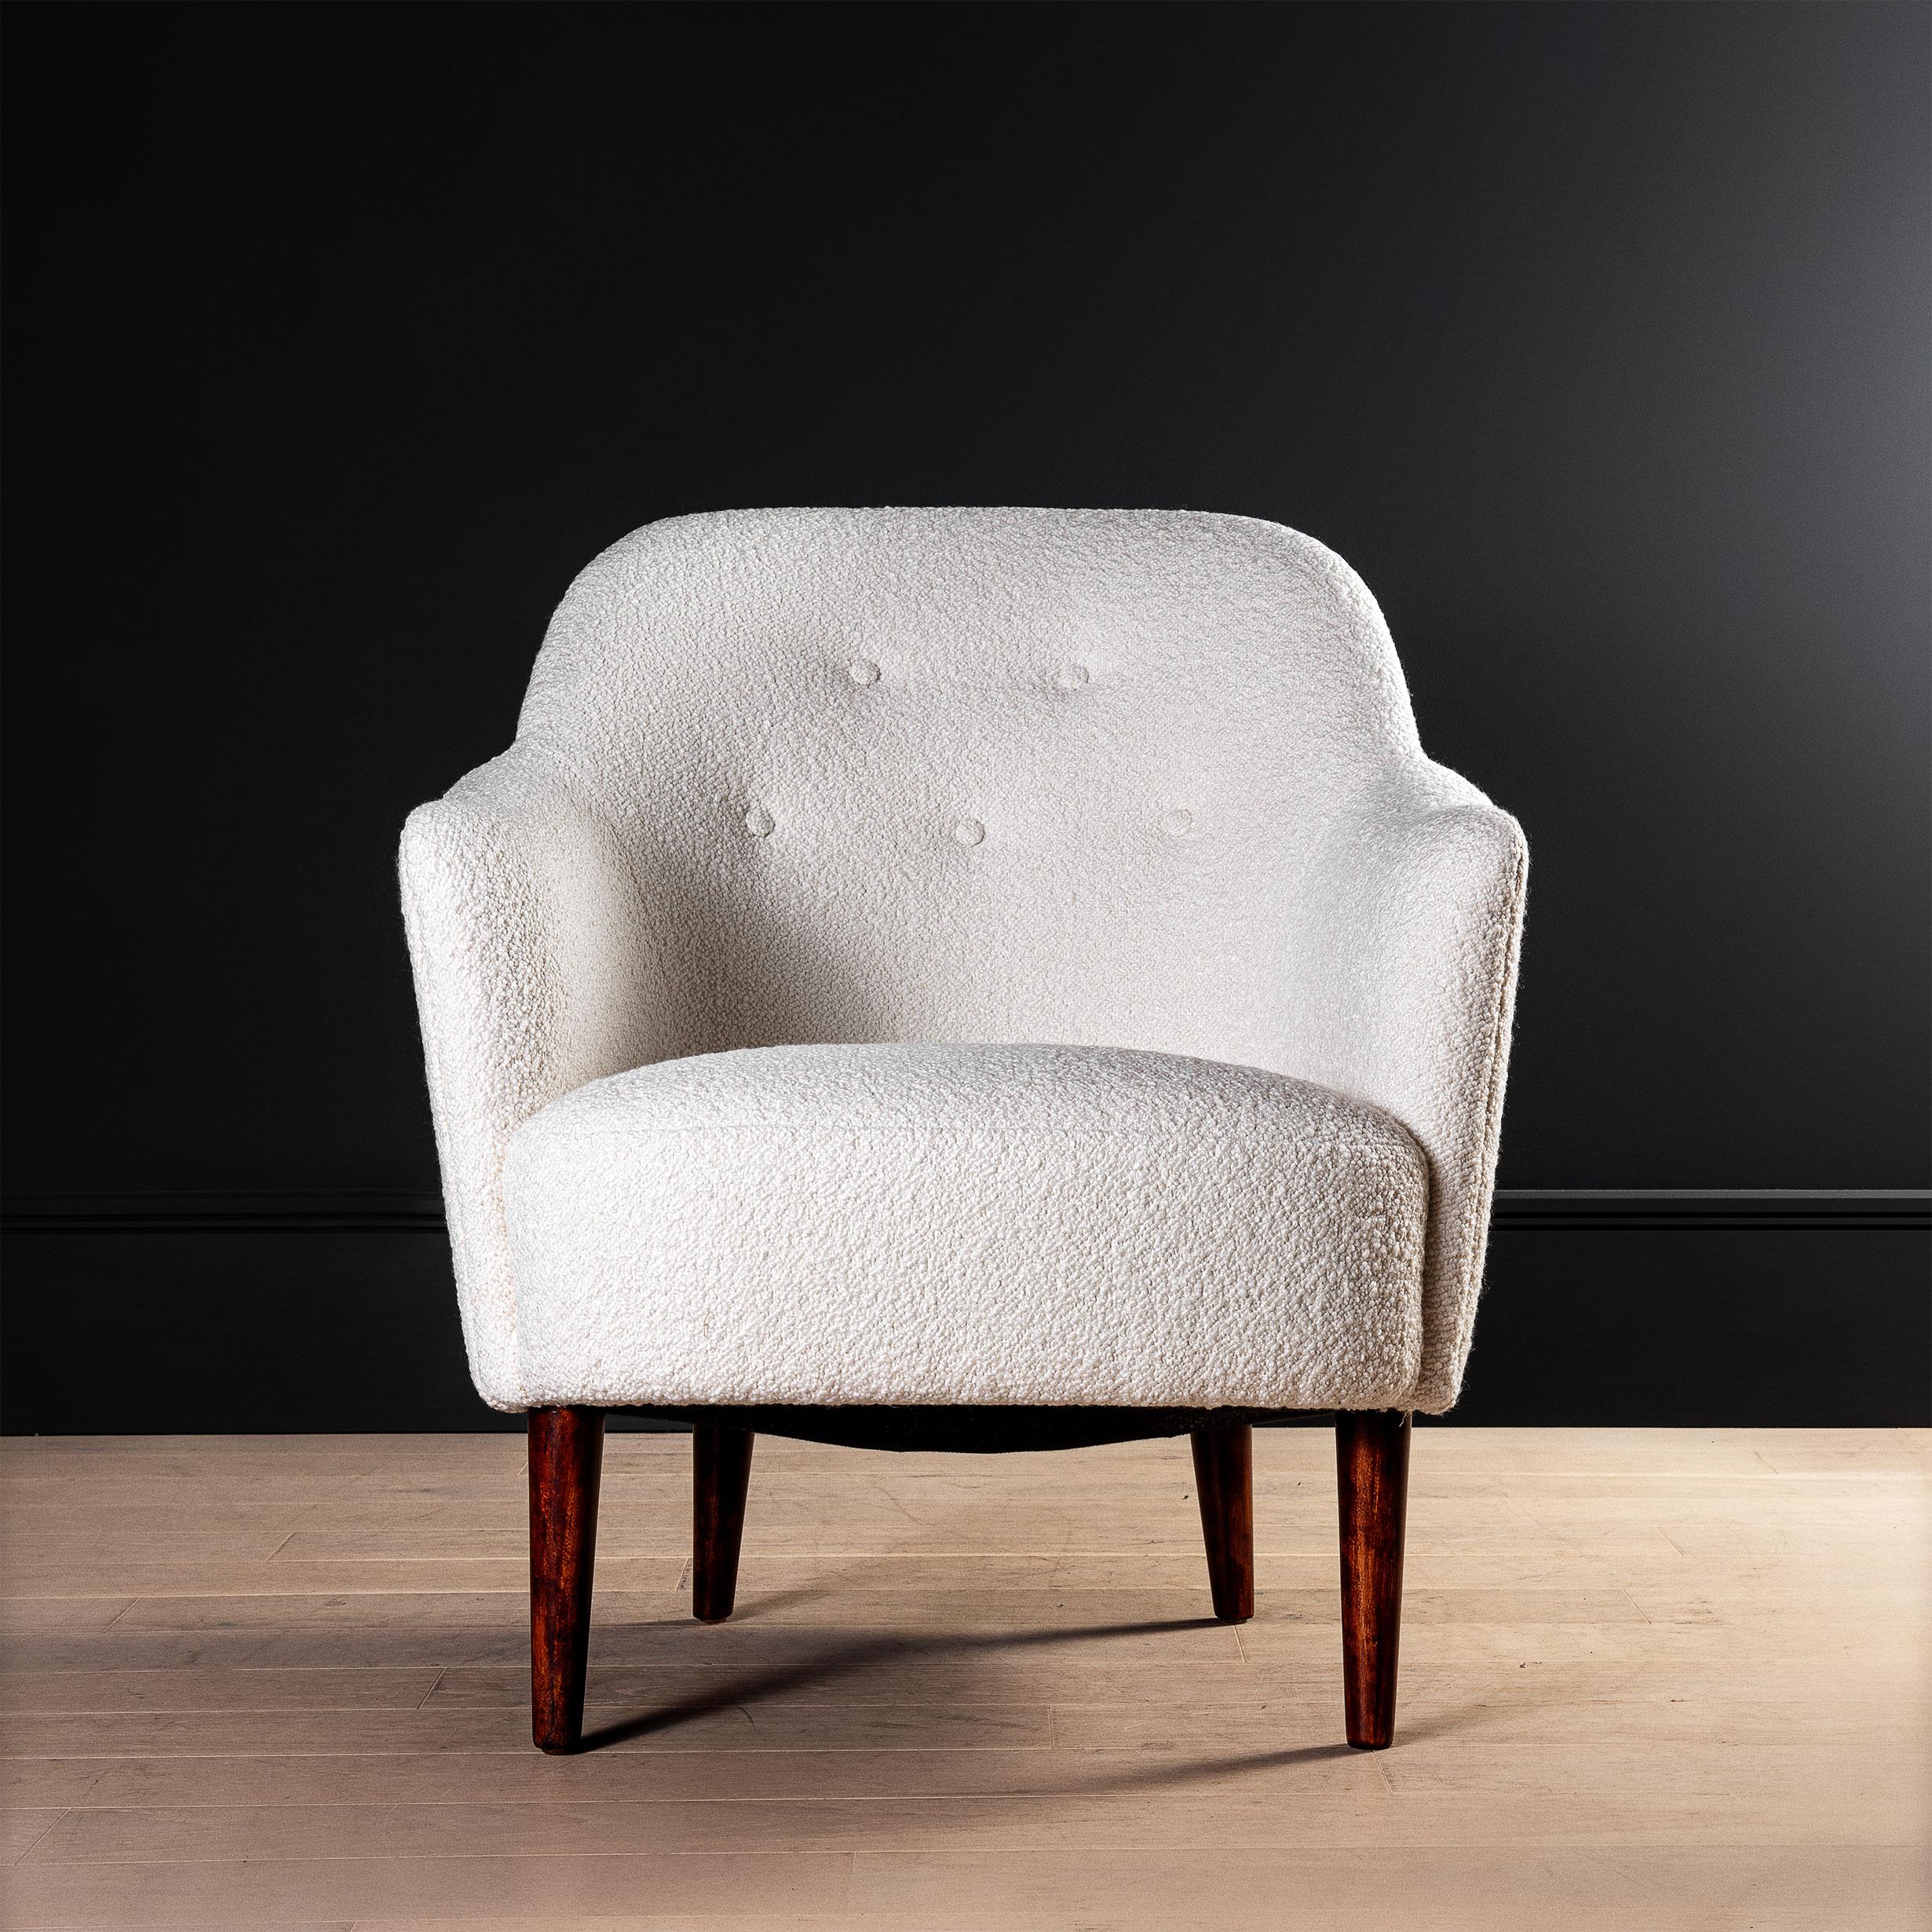 Fabric Swedish Chair, 1950's, Carl Malmsten, Samspel, Reupholstered